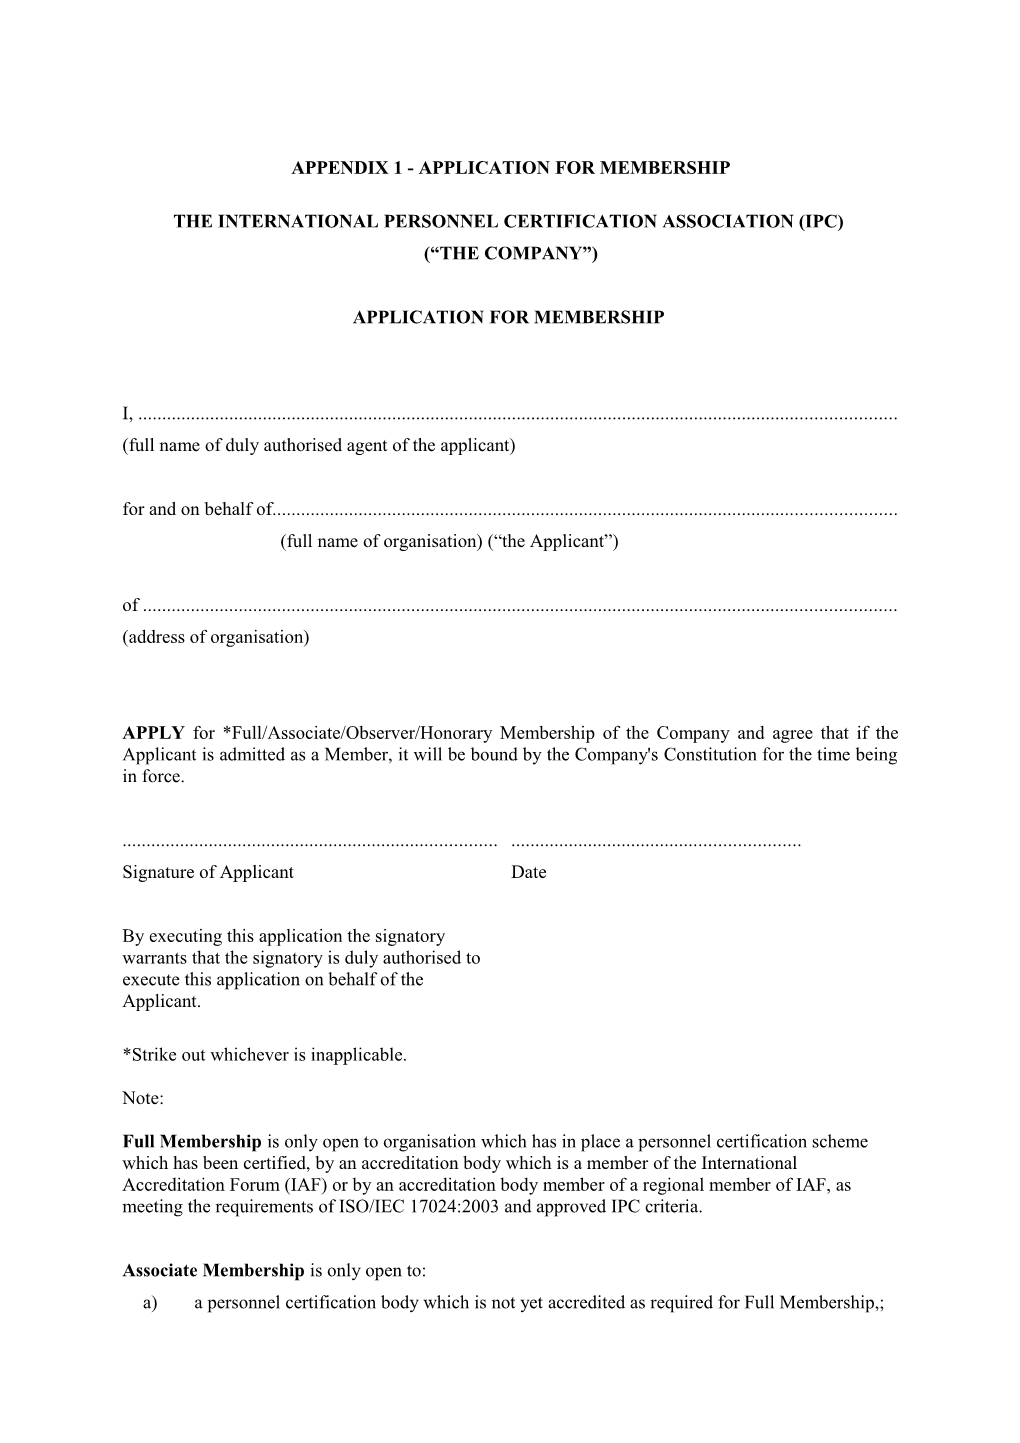 Appendix 1 - Application for Membership